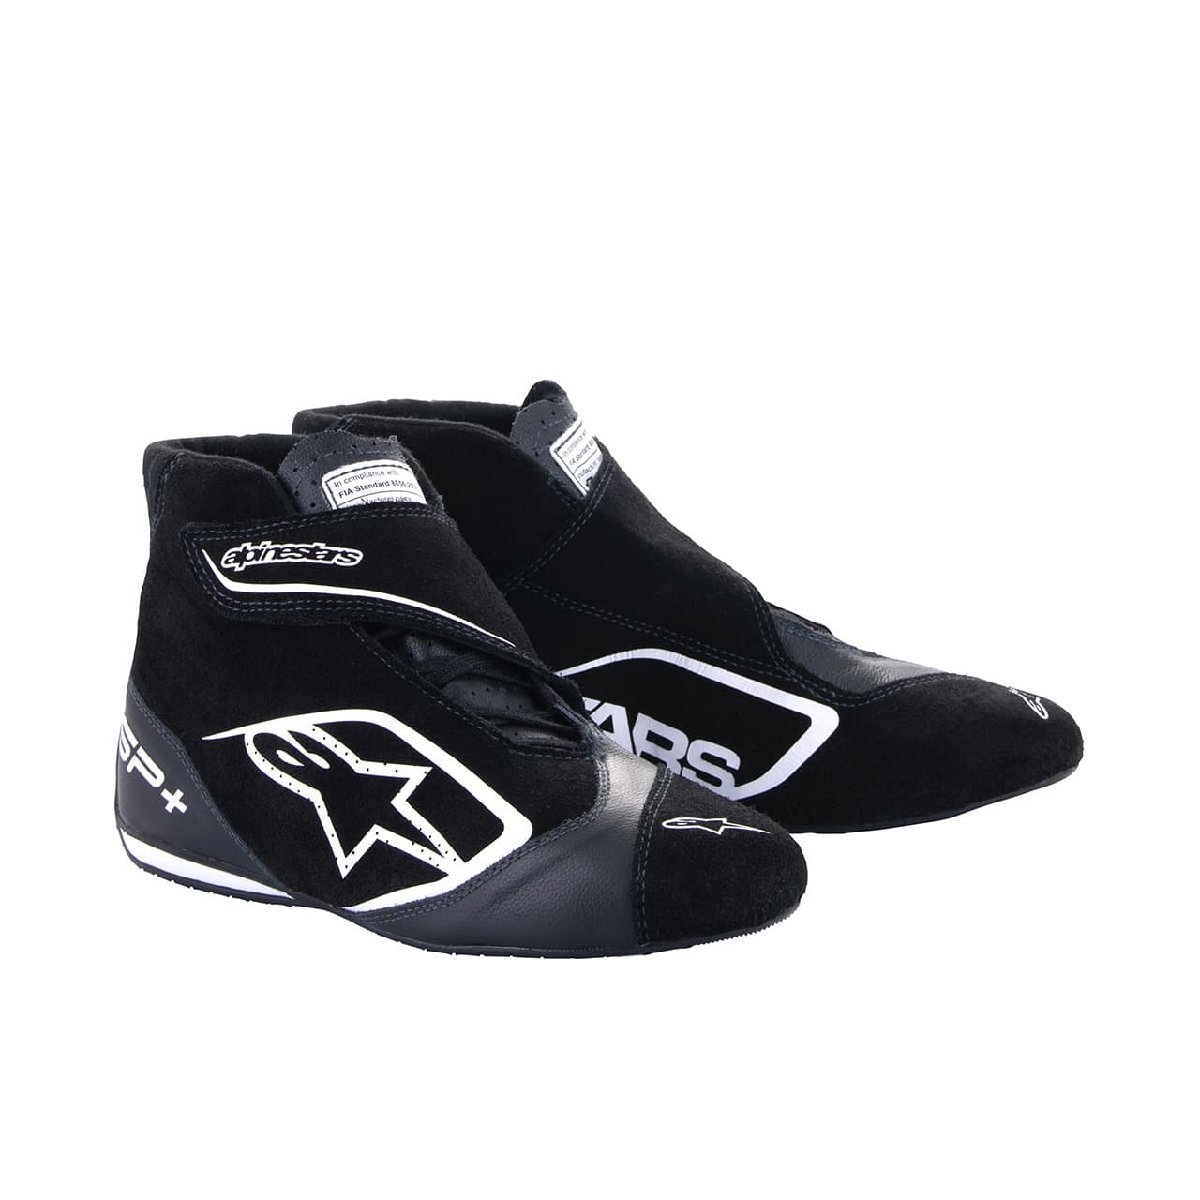 alpinestars( Alpine Stars ) racing shoes SP + SHOES ( size USD: 7.5) 12 BLACK WHITE [FIA8856-2018 official recognition ]